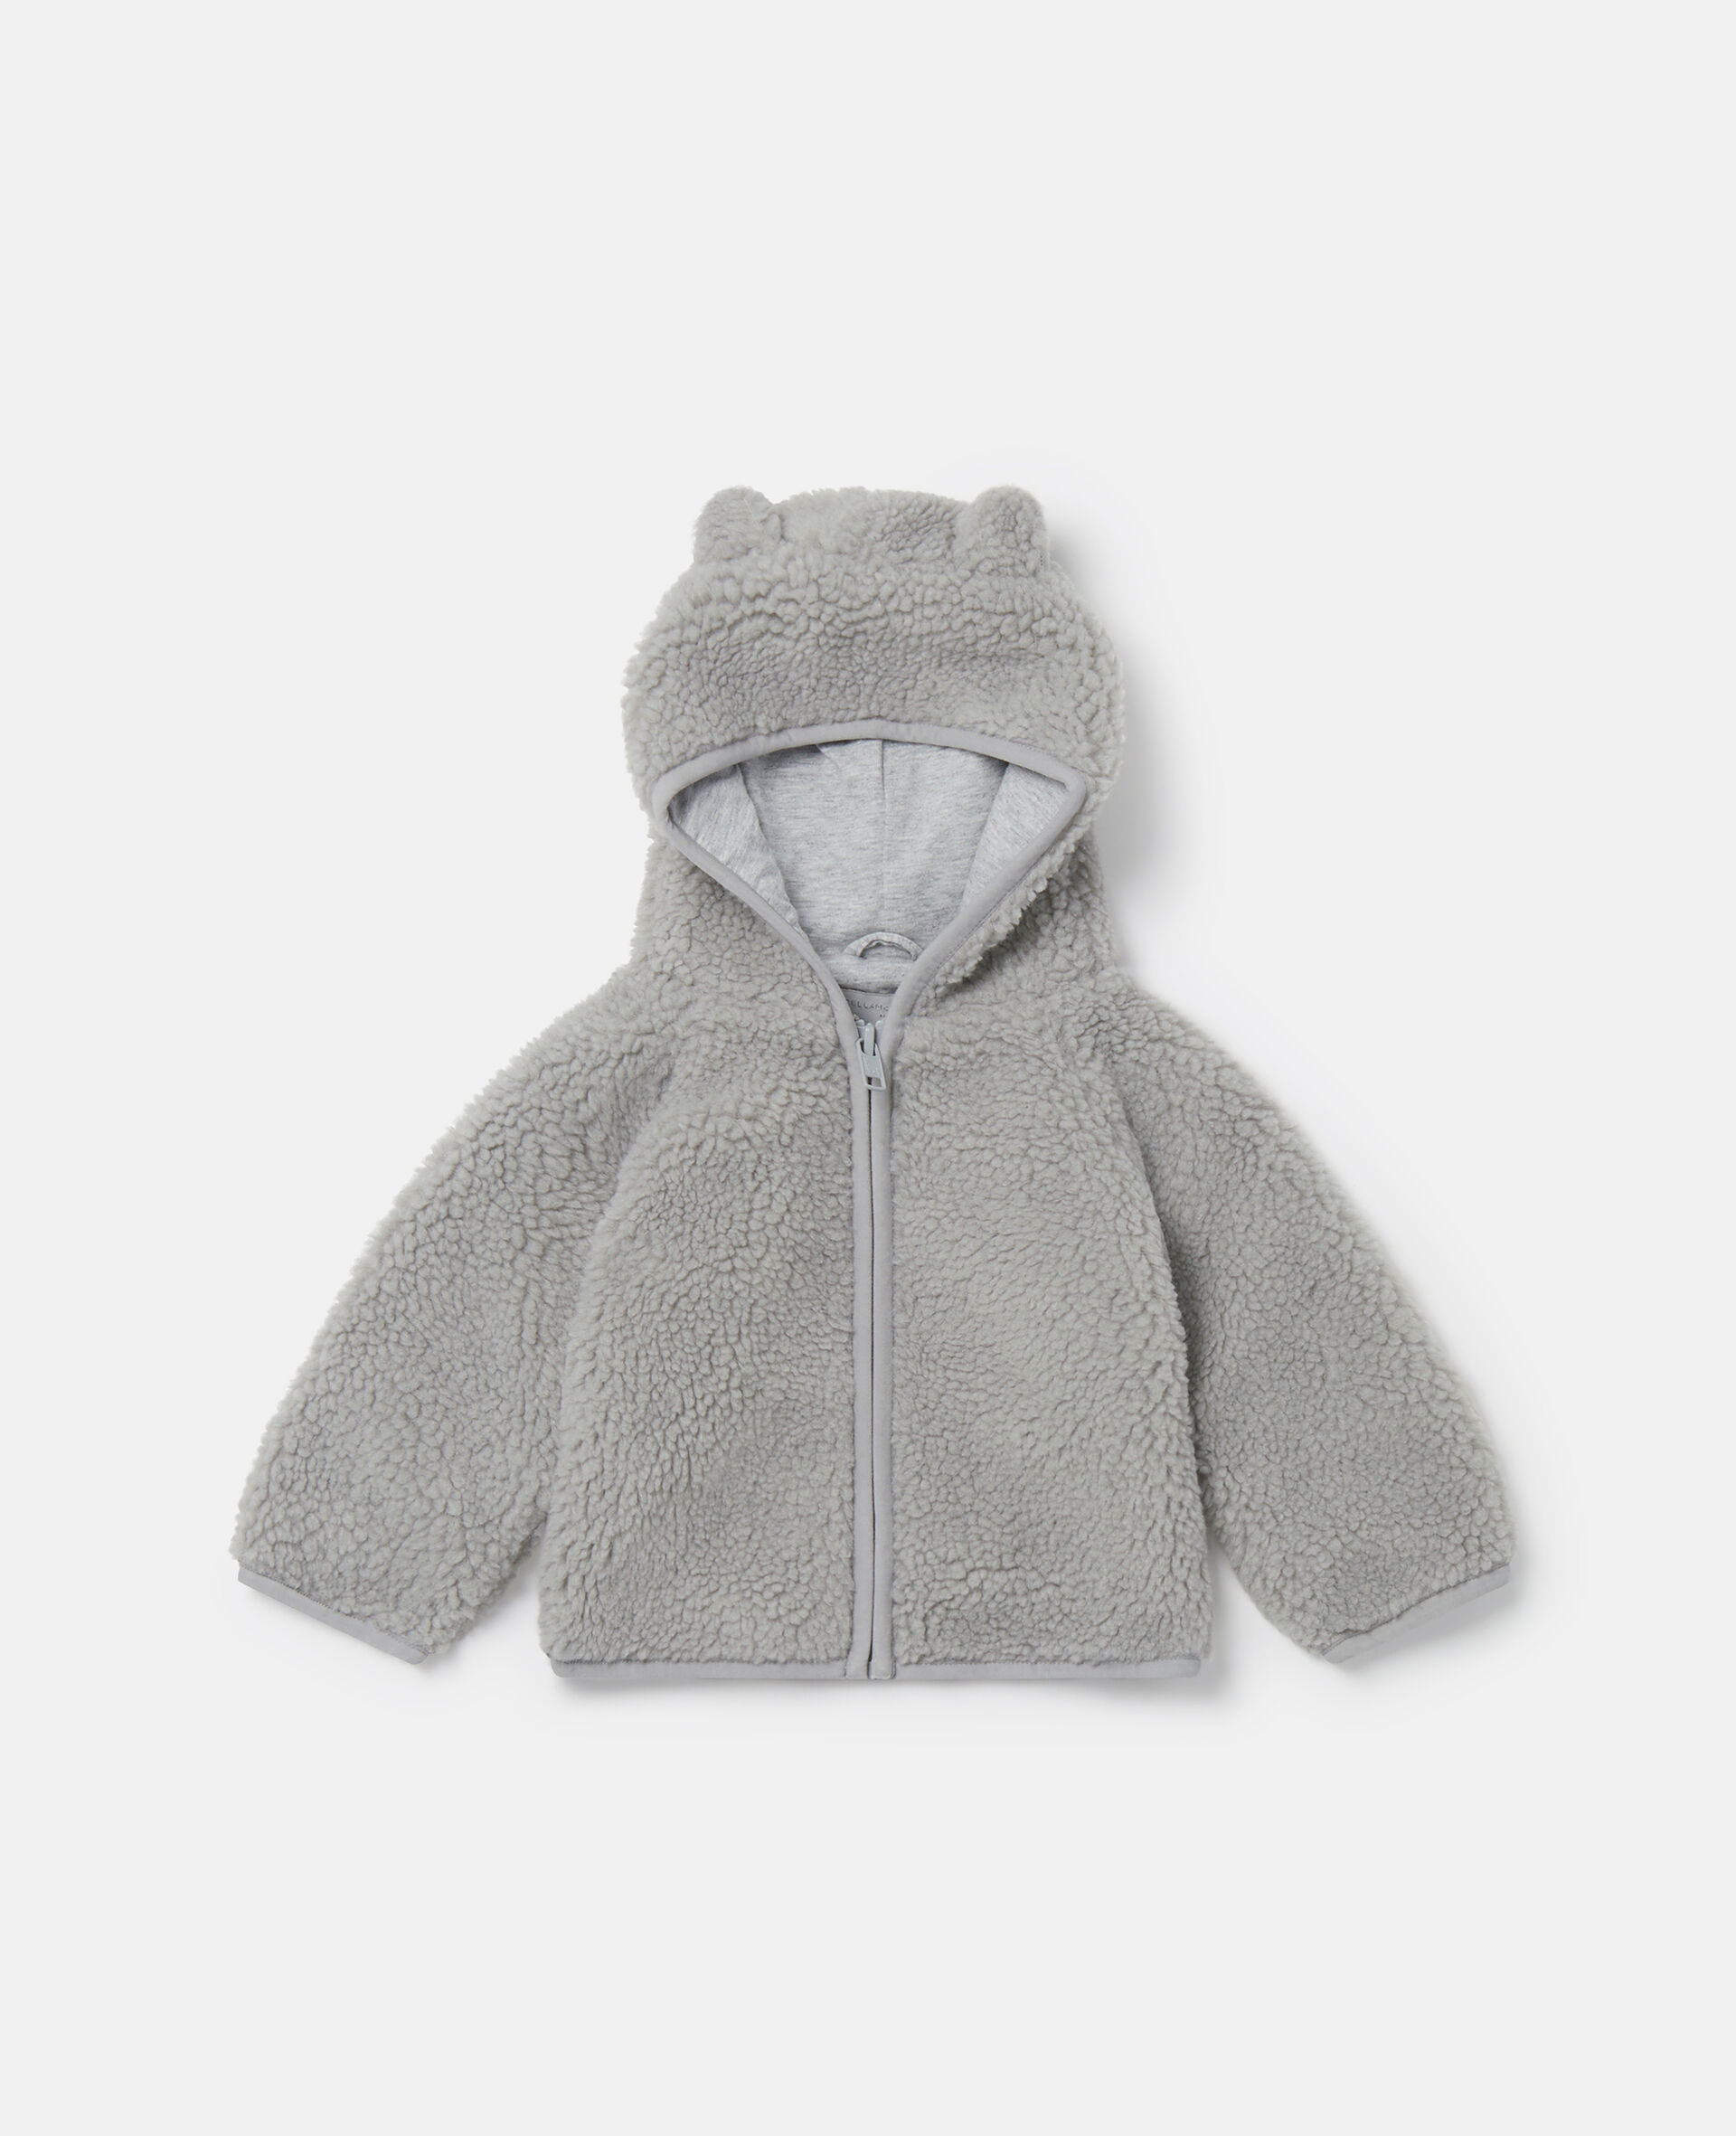 Bear Ear Hooded Fleece Jacket-Grey-large image number 0